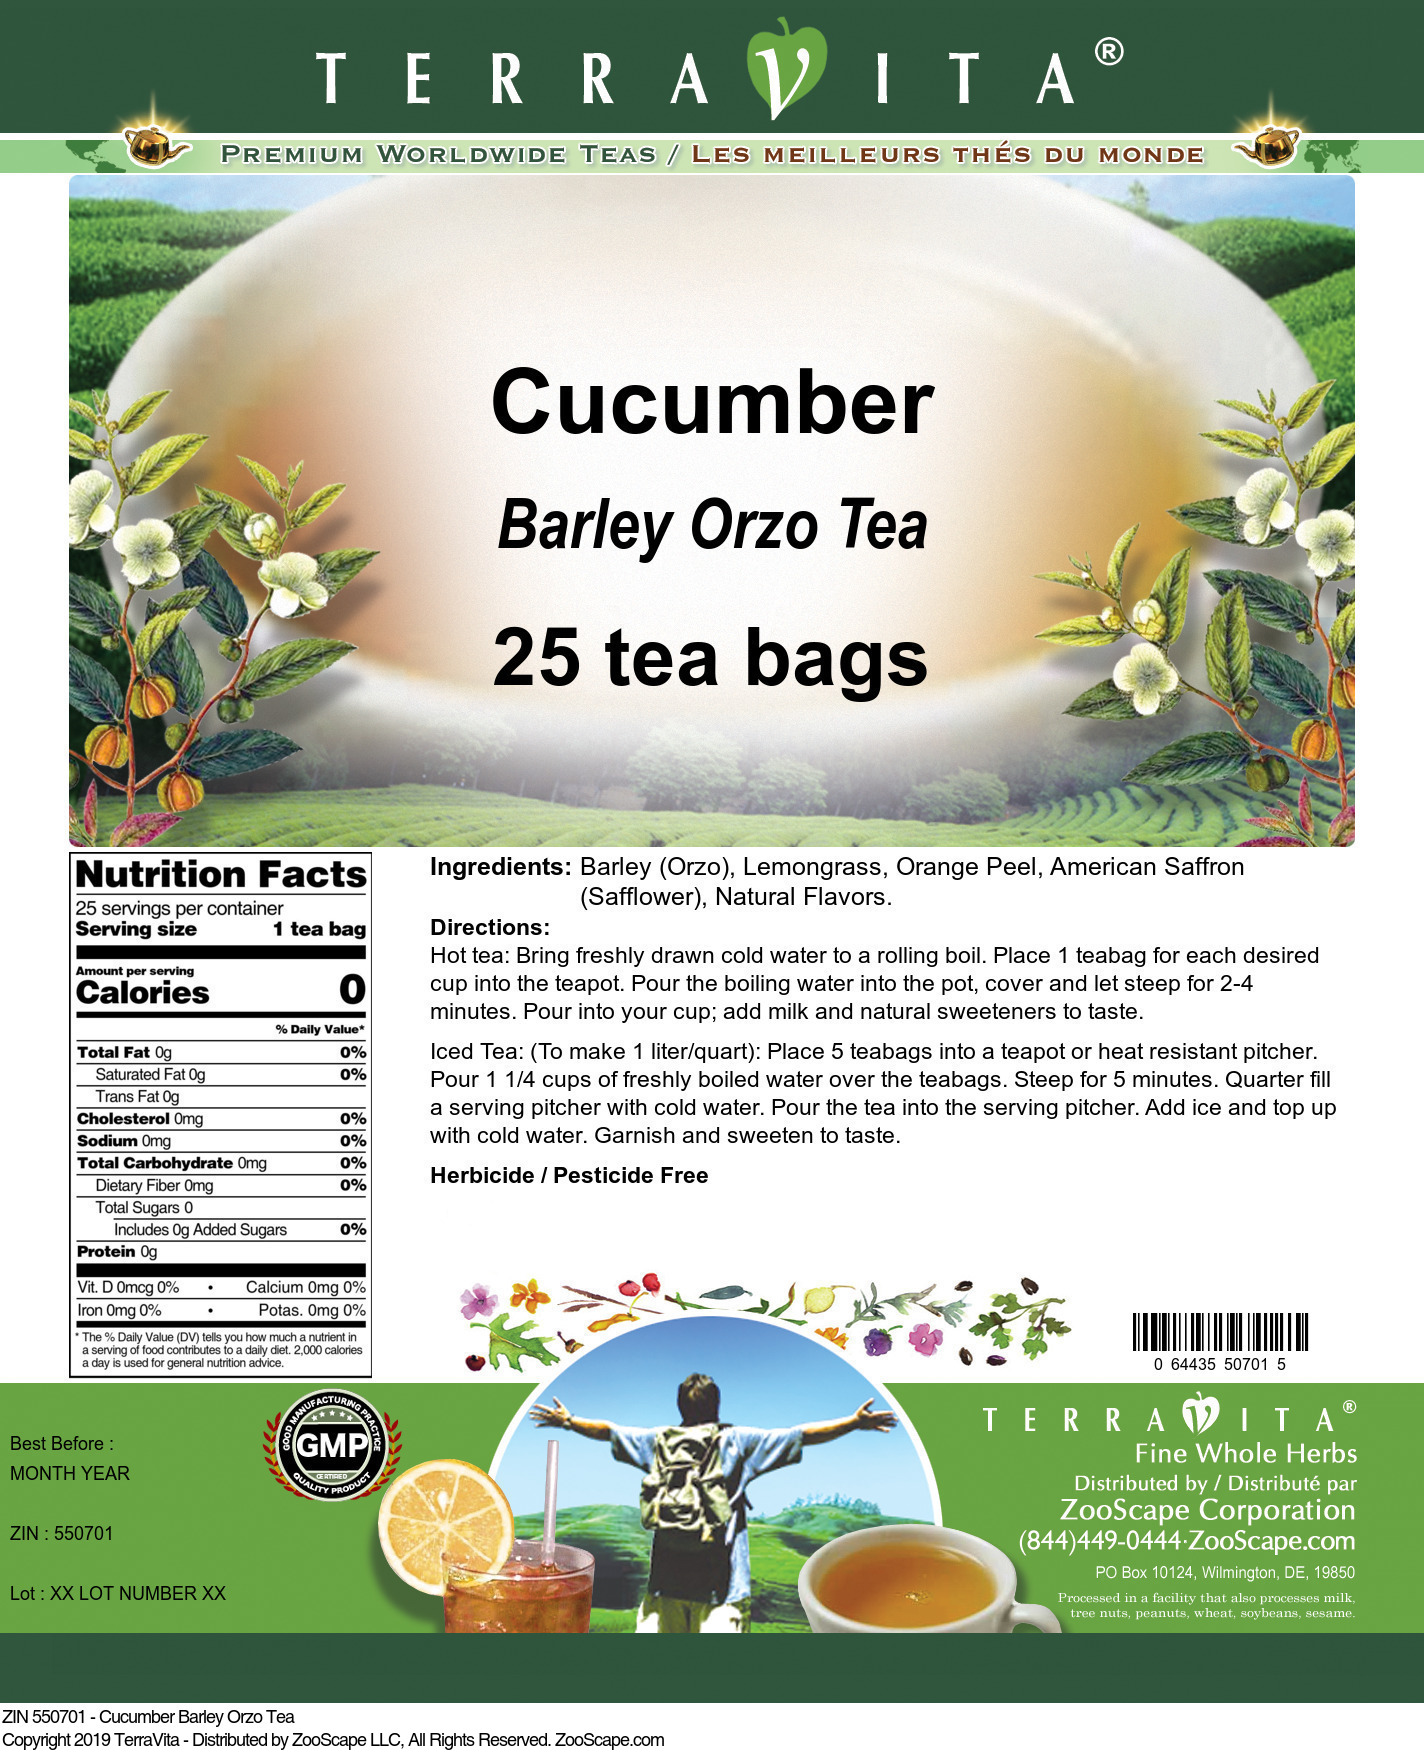 Cucumber Barley Orzo Tea - Label